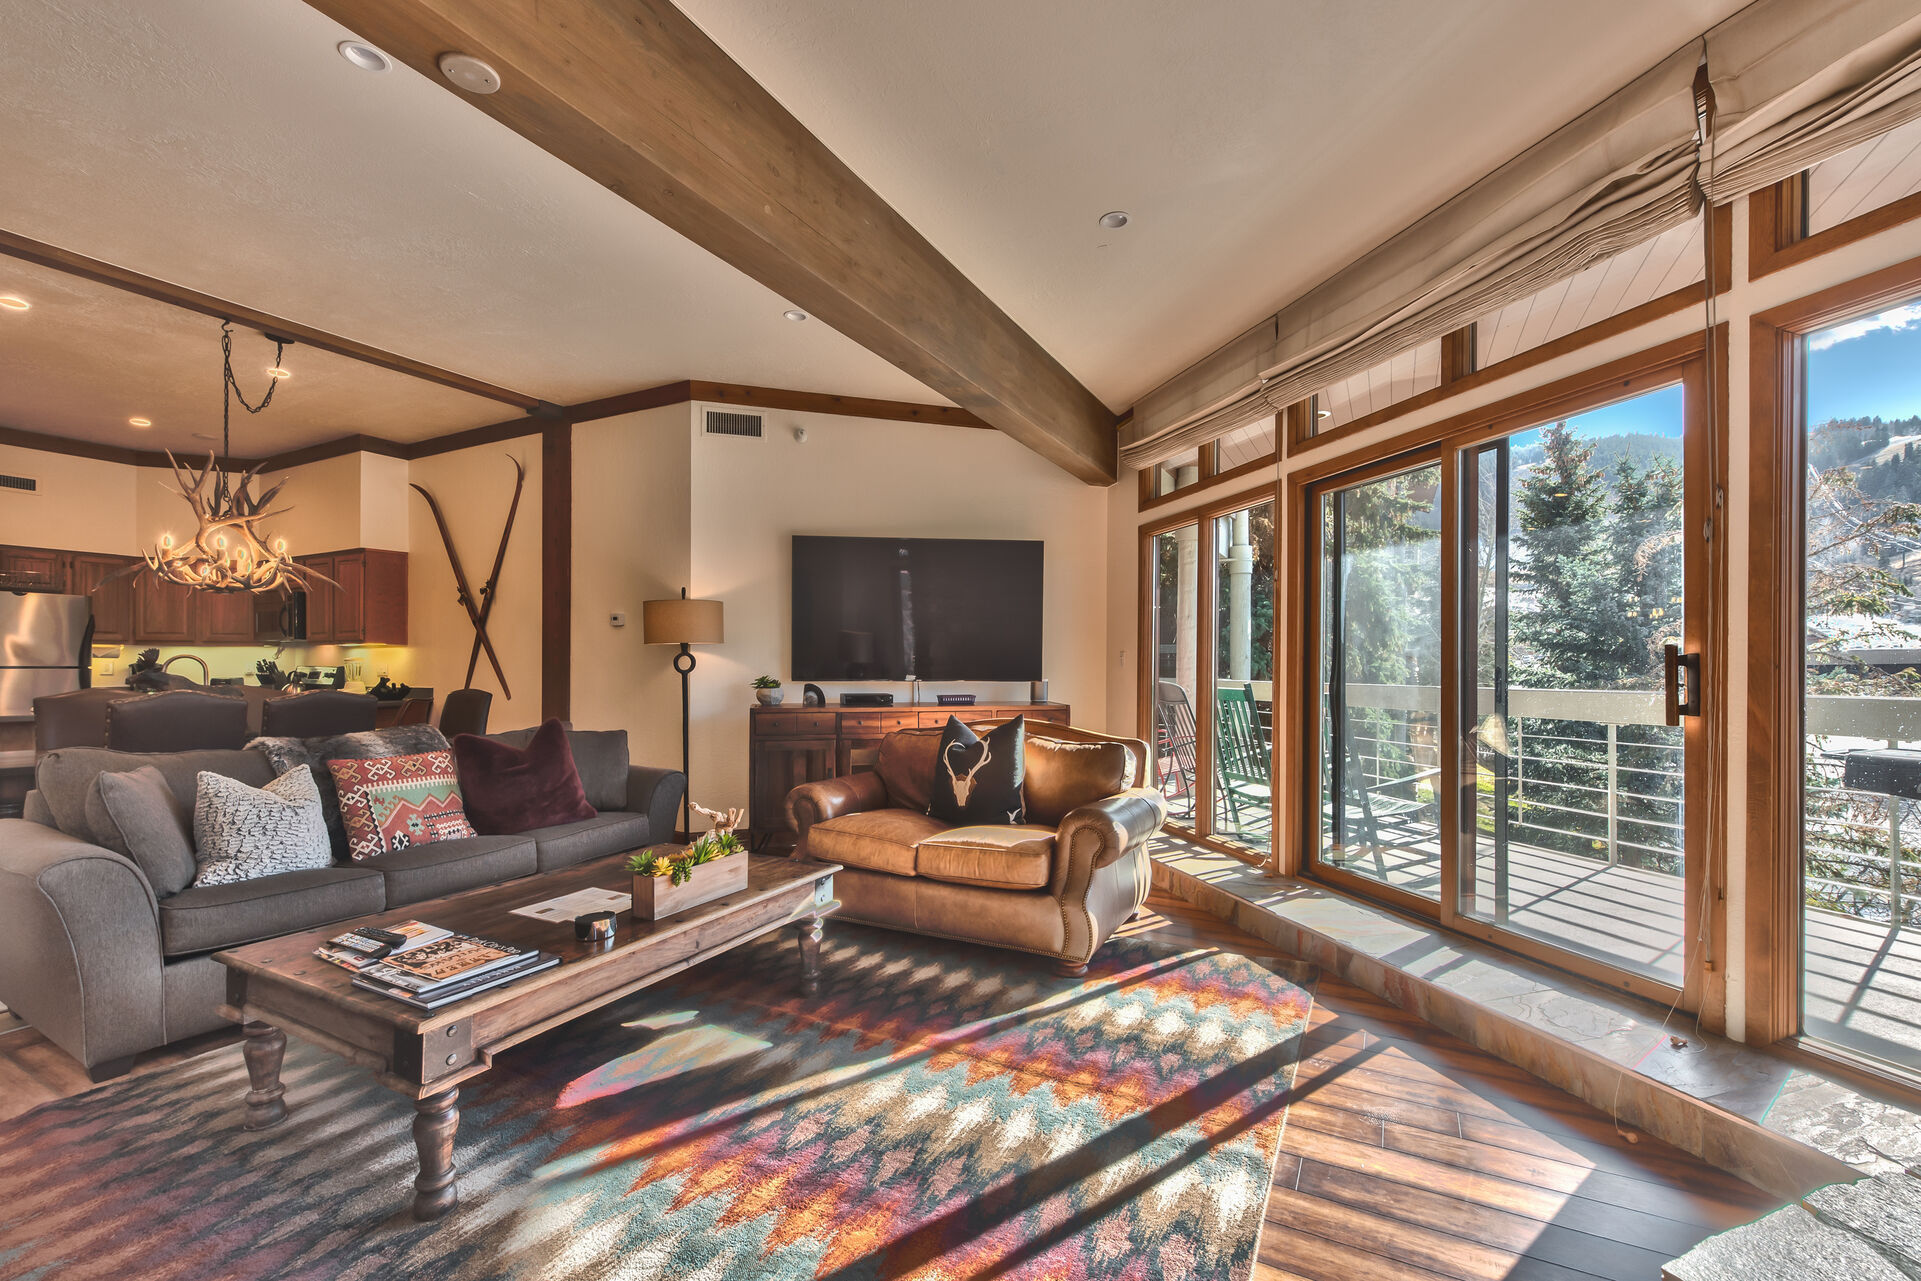 Living Room with Comfortable Mountain Furnishings, New Hardwood Floors and Mountain Views